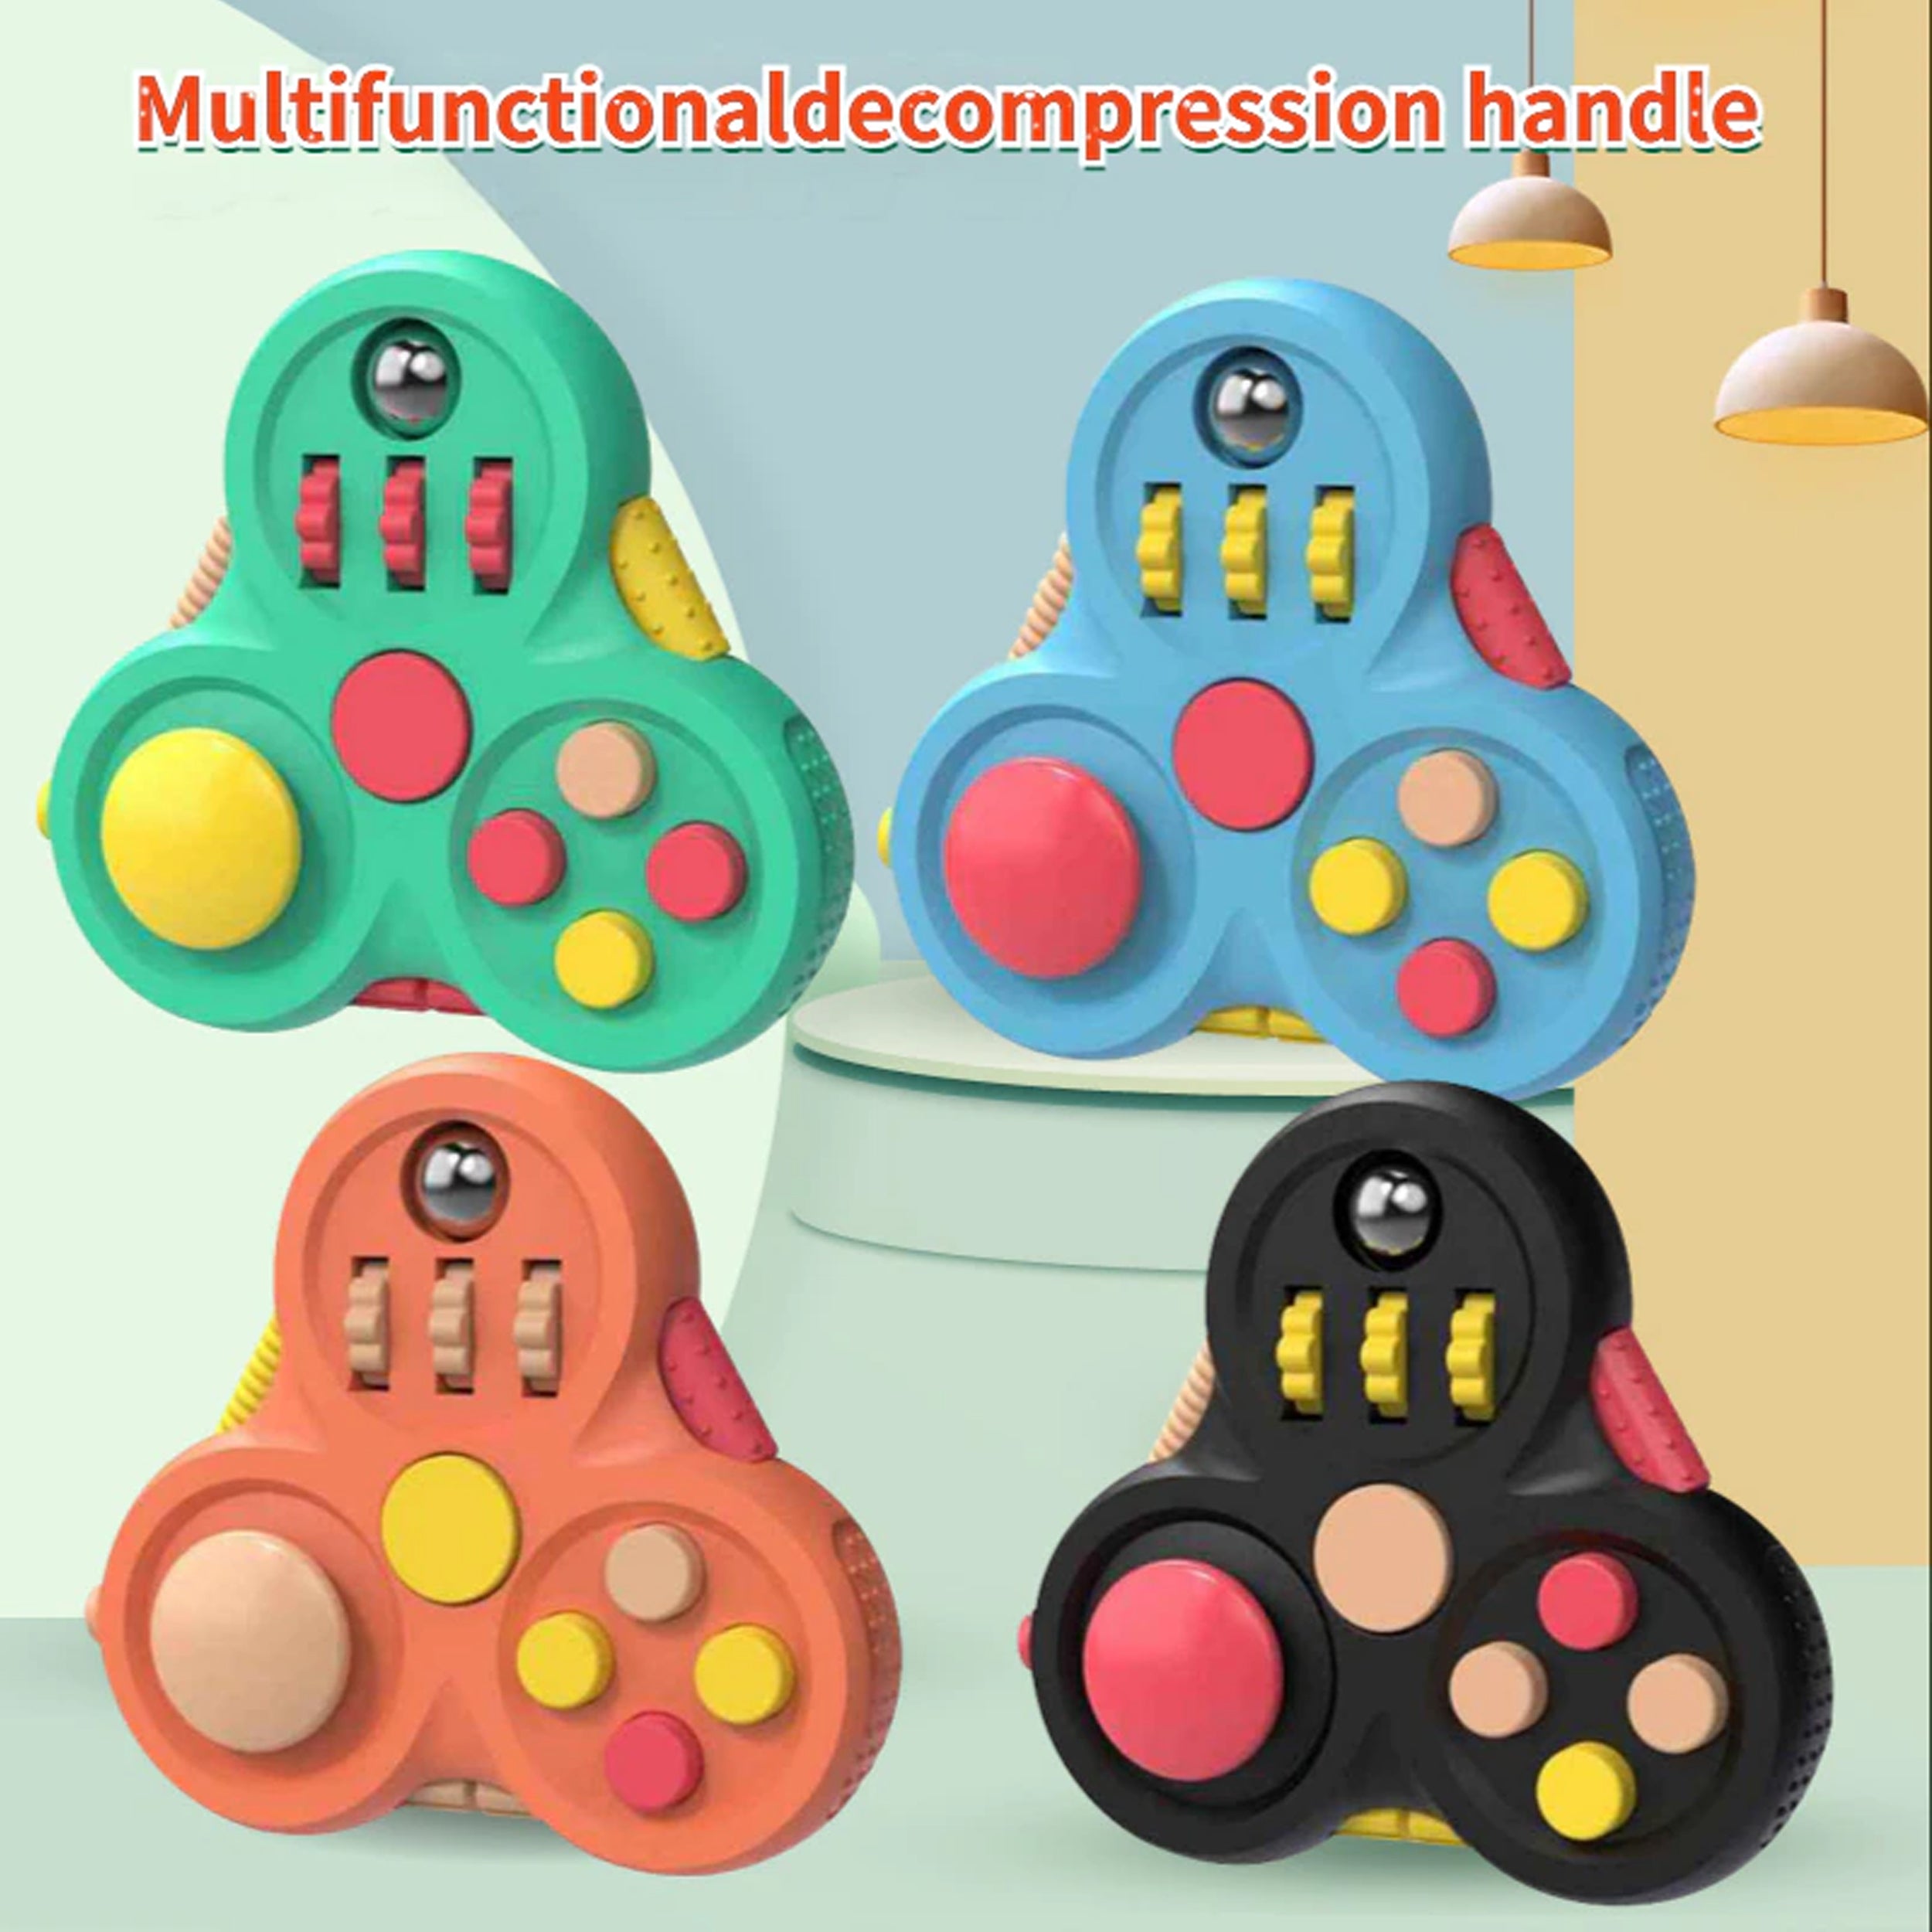 Handle Controller Type 3 Fidget Pad Toy